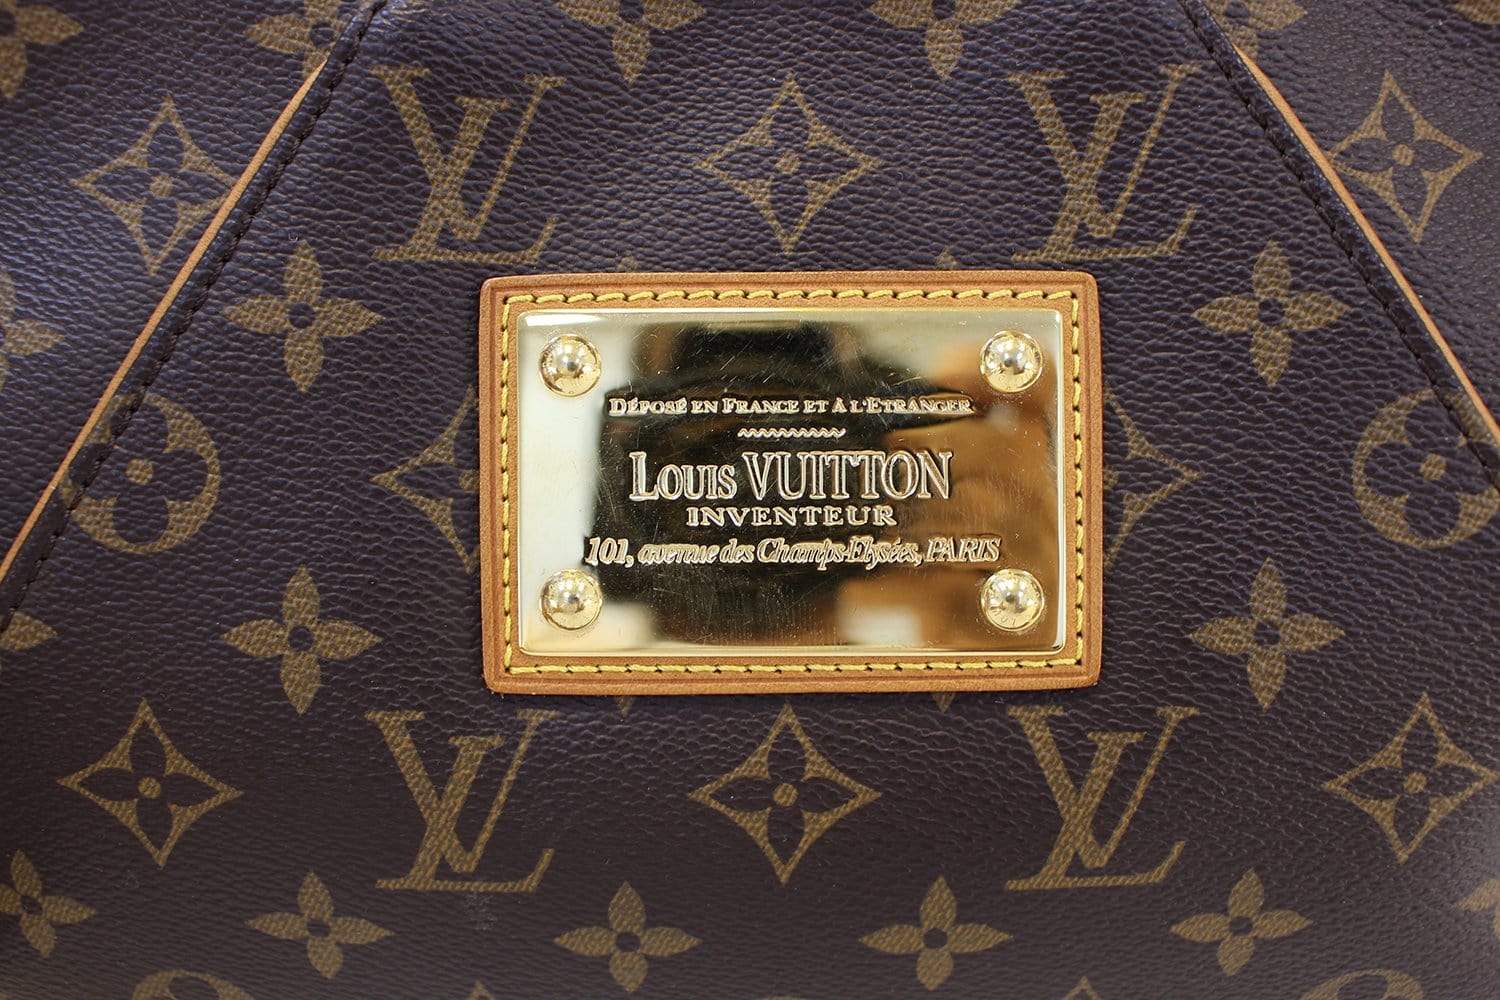 Louis Vuitton Inventeur bag  Louis vuitton, Bags, Louis vuitton bag